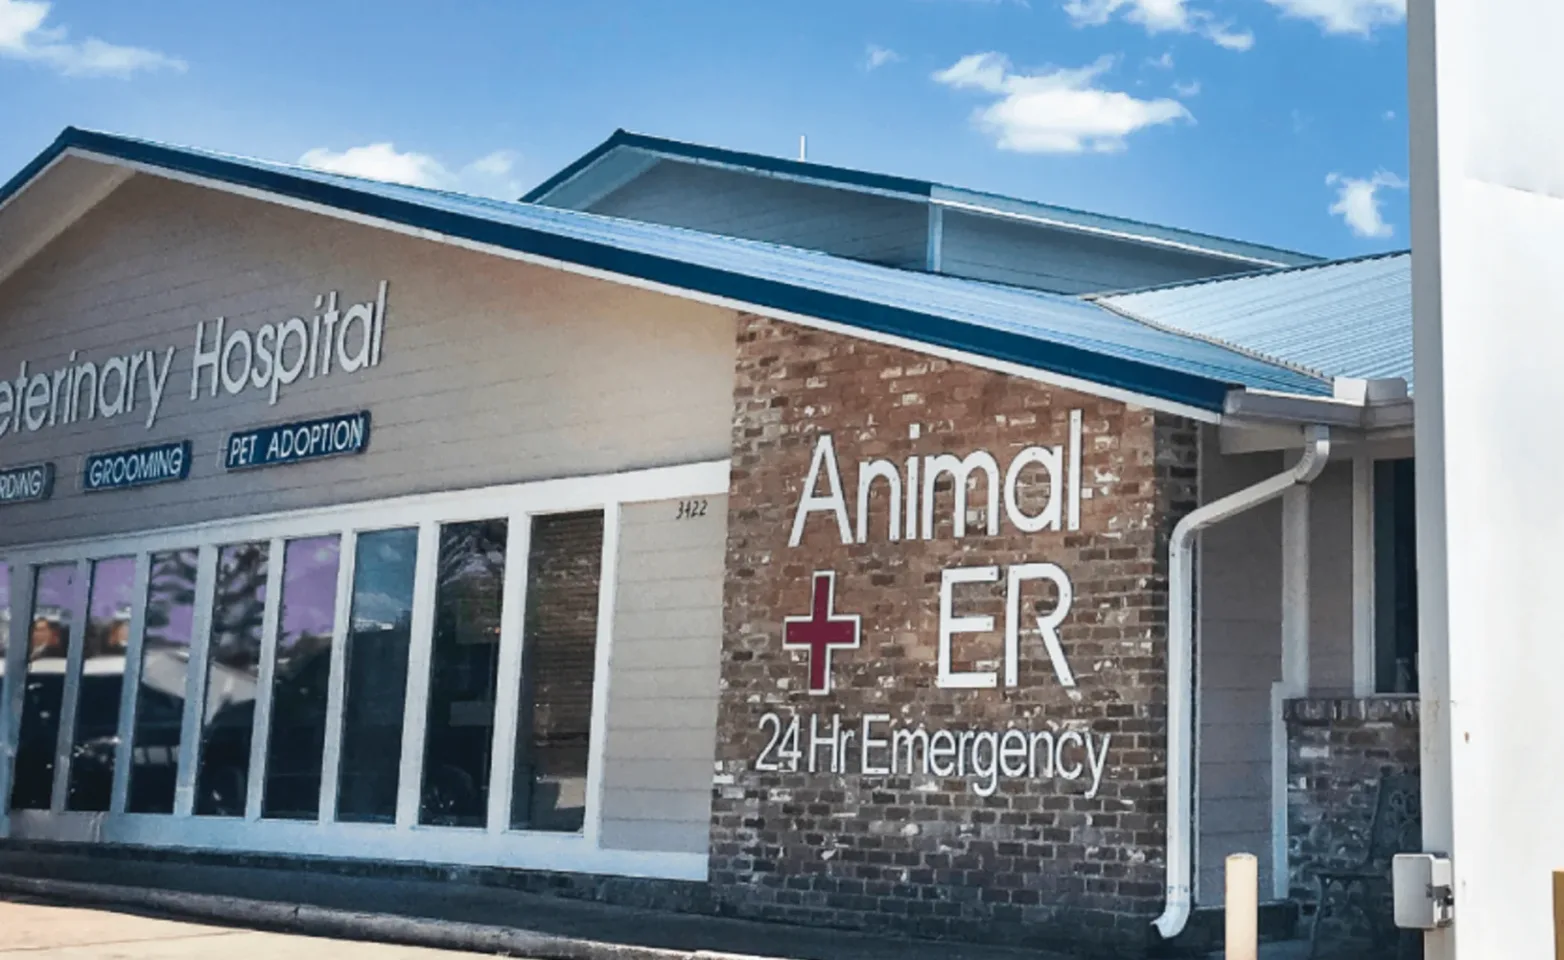 Animal Medical Clinic (AMC) of Hattiesburg